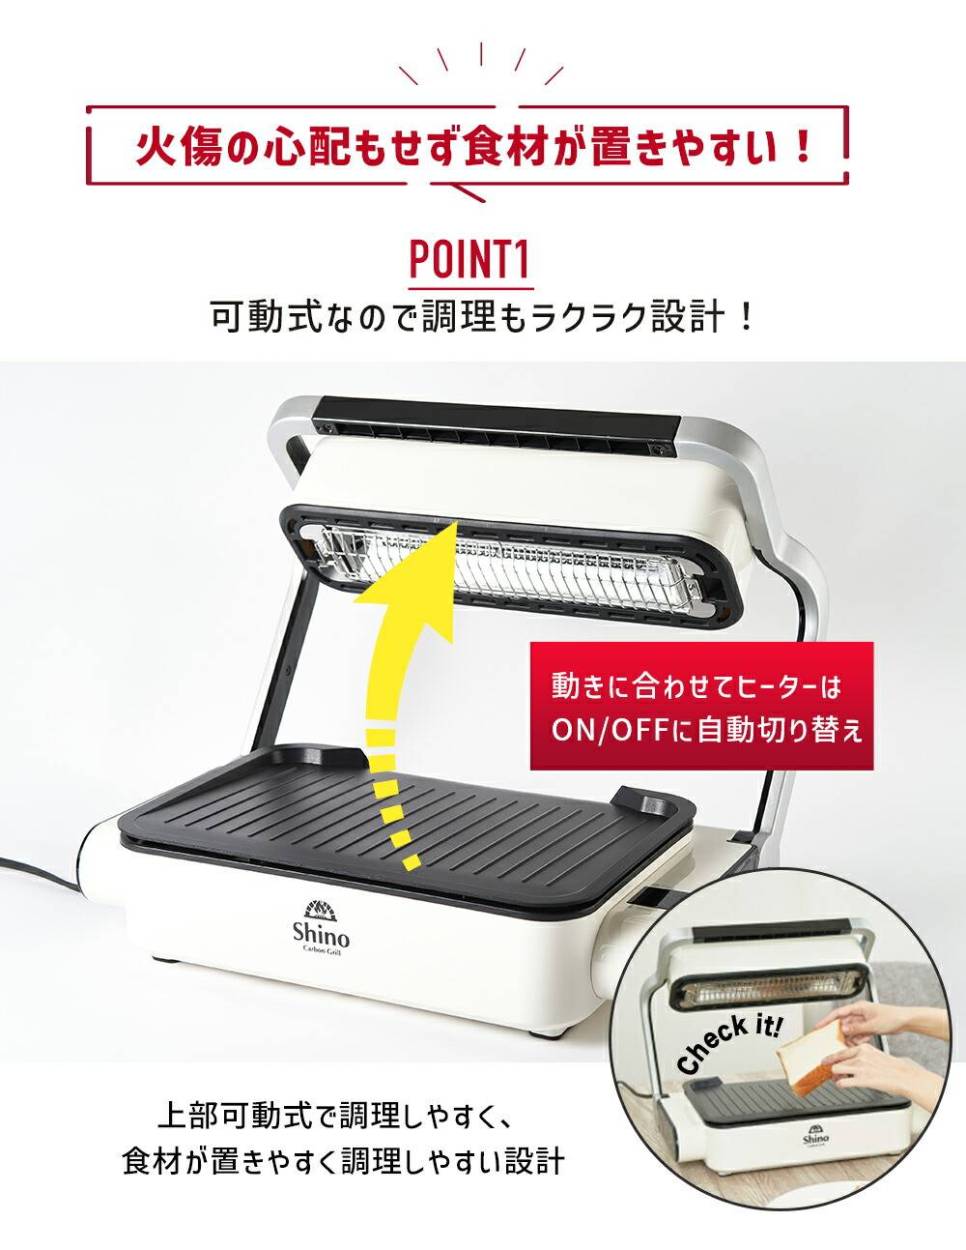 Shino Carbon Grill（シーノカーボングリル）深型プレートセット 無煙